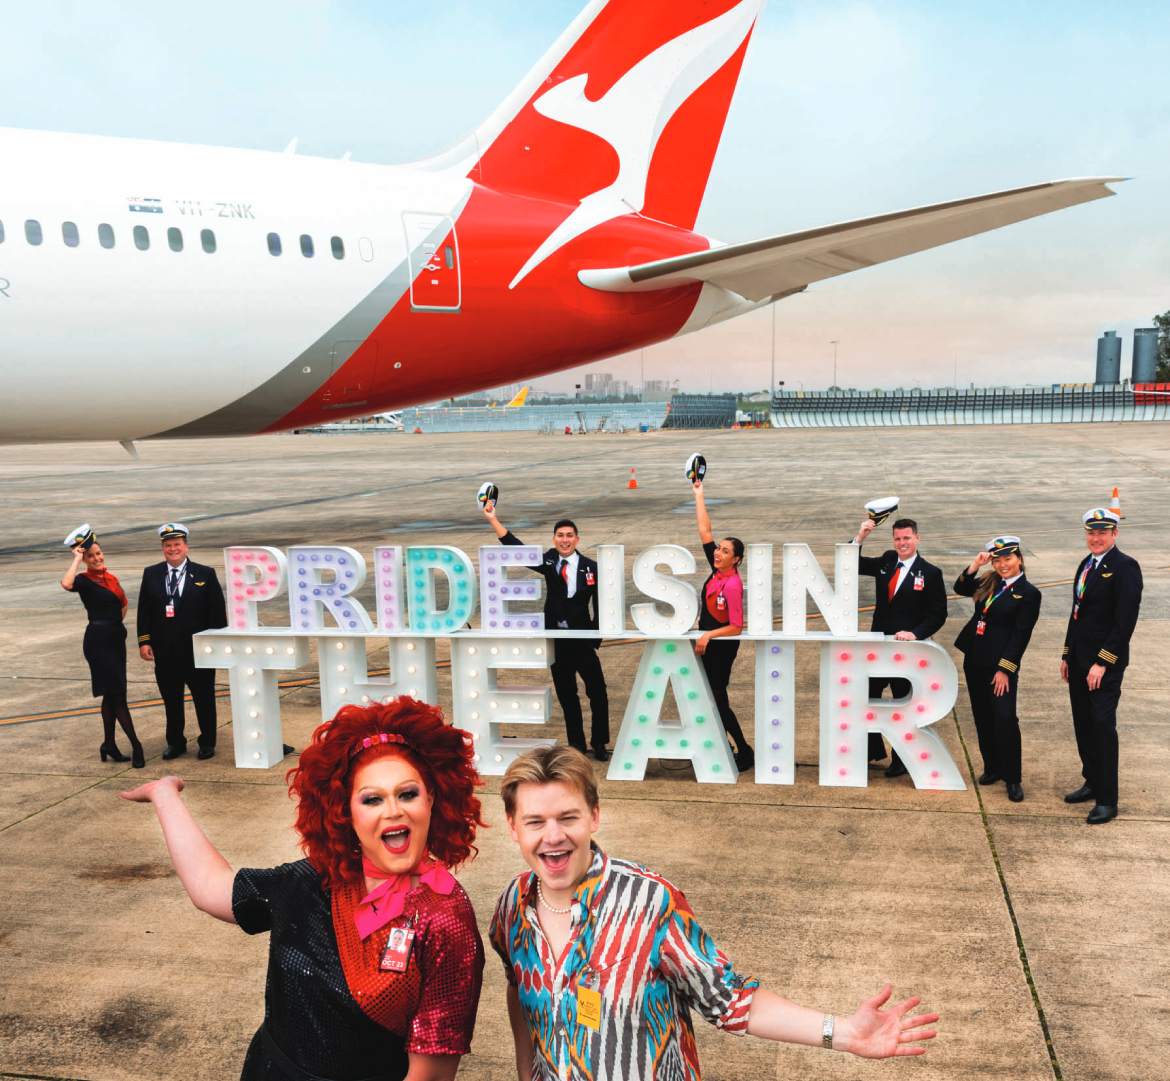 Qantas Pride Flight (Photo by Courtesy of Qantas)